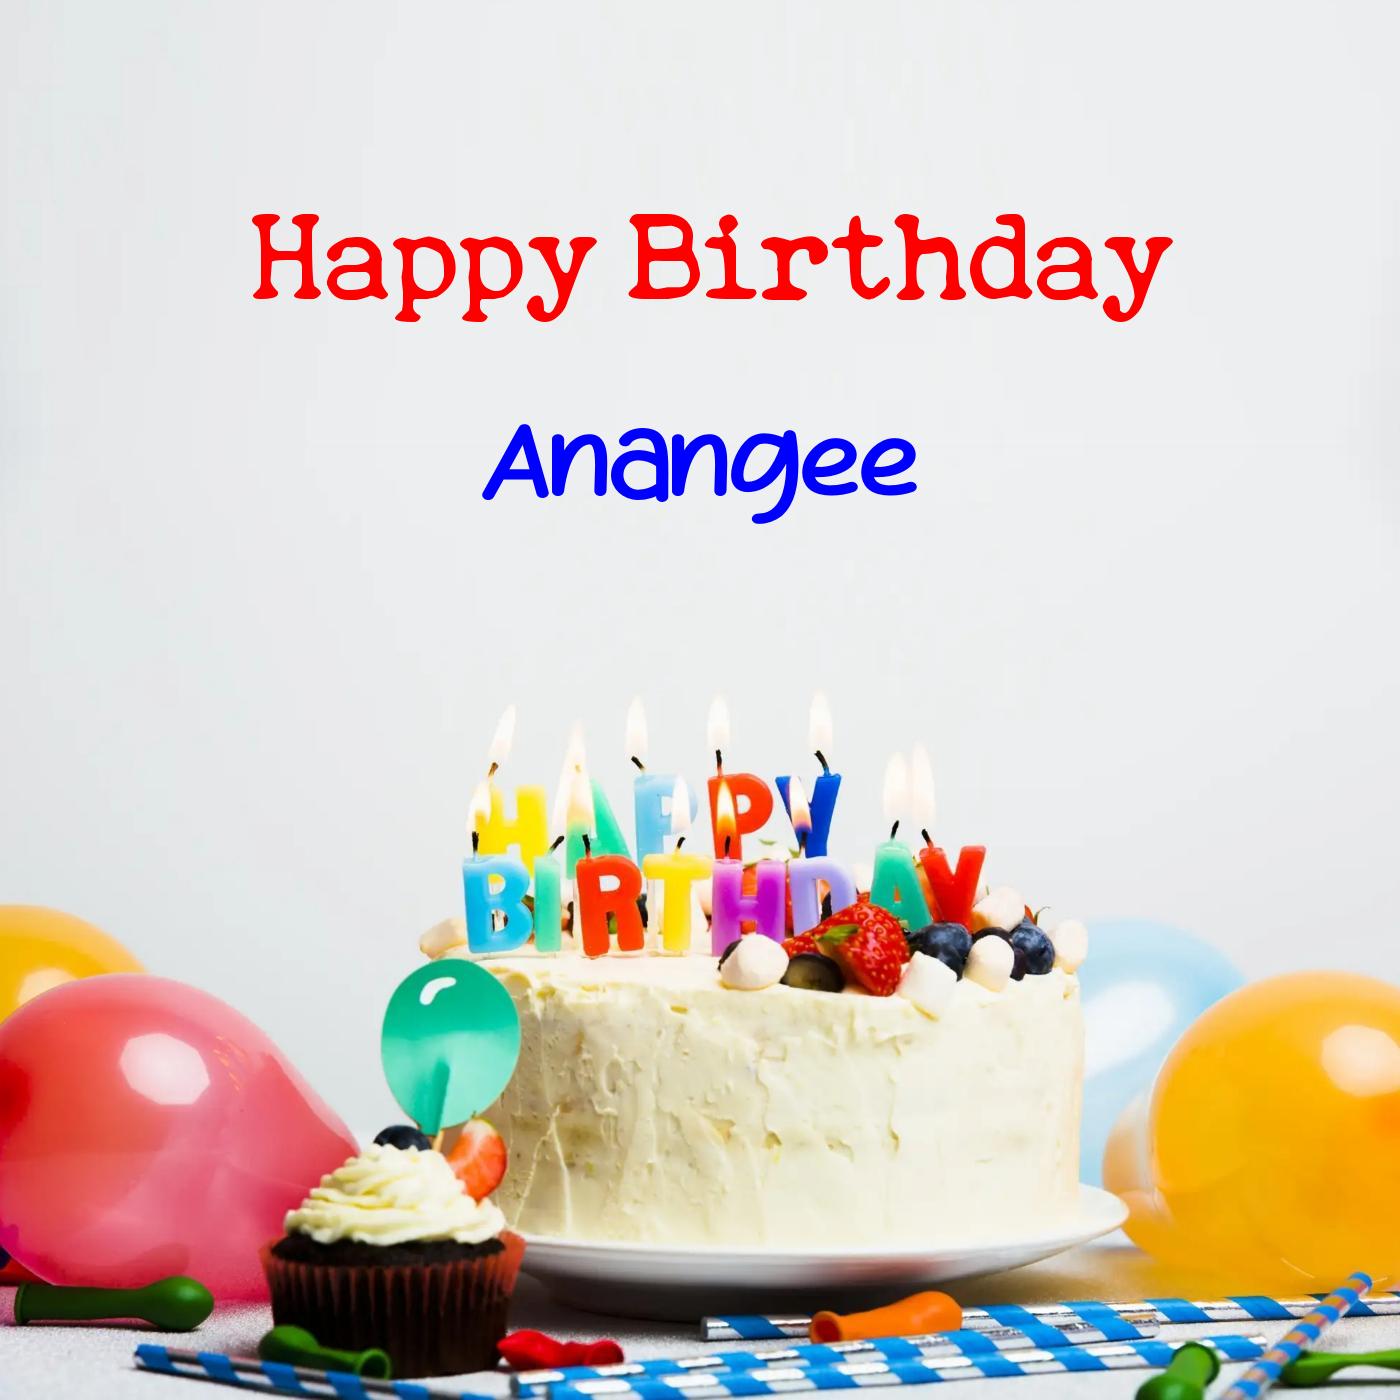 Happy Birthday Anangee Cake Balloons Card